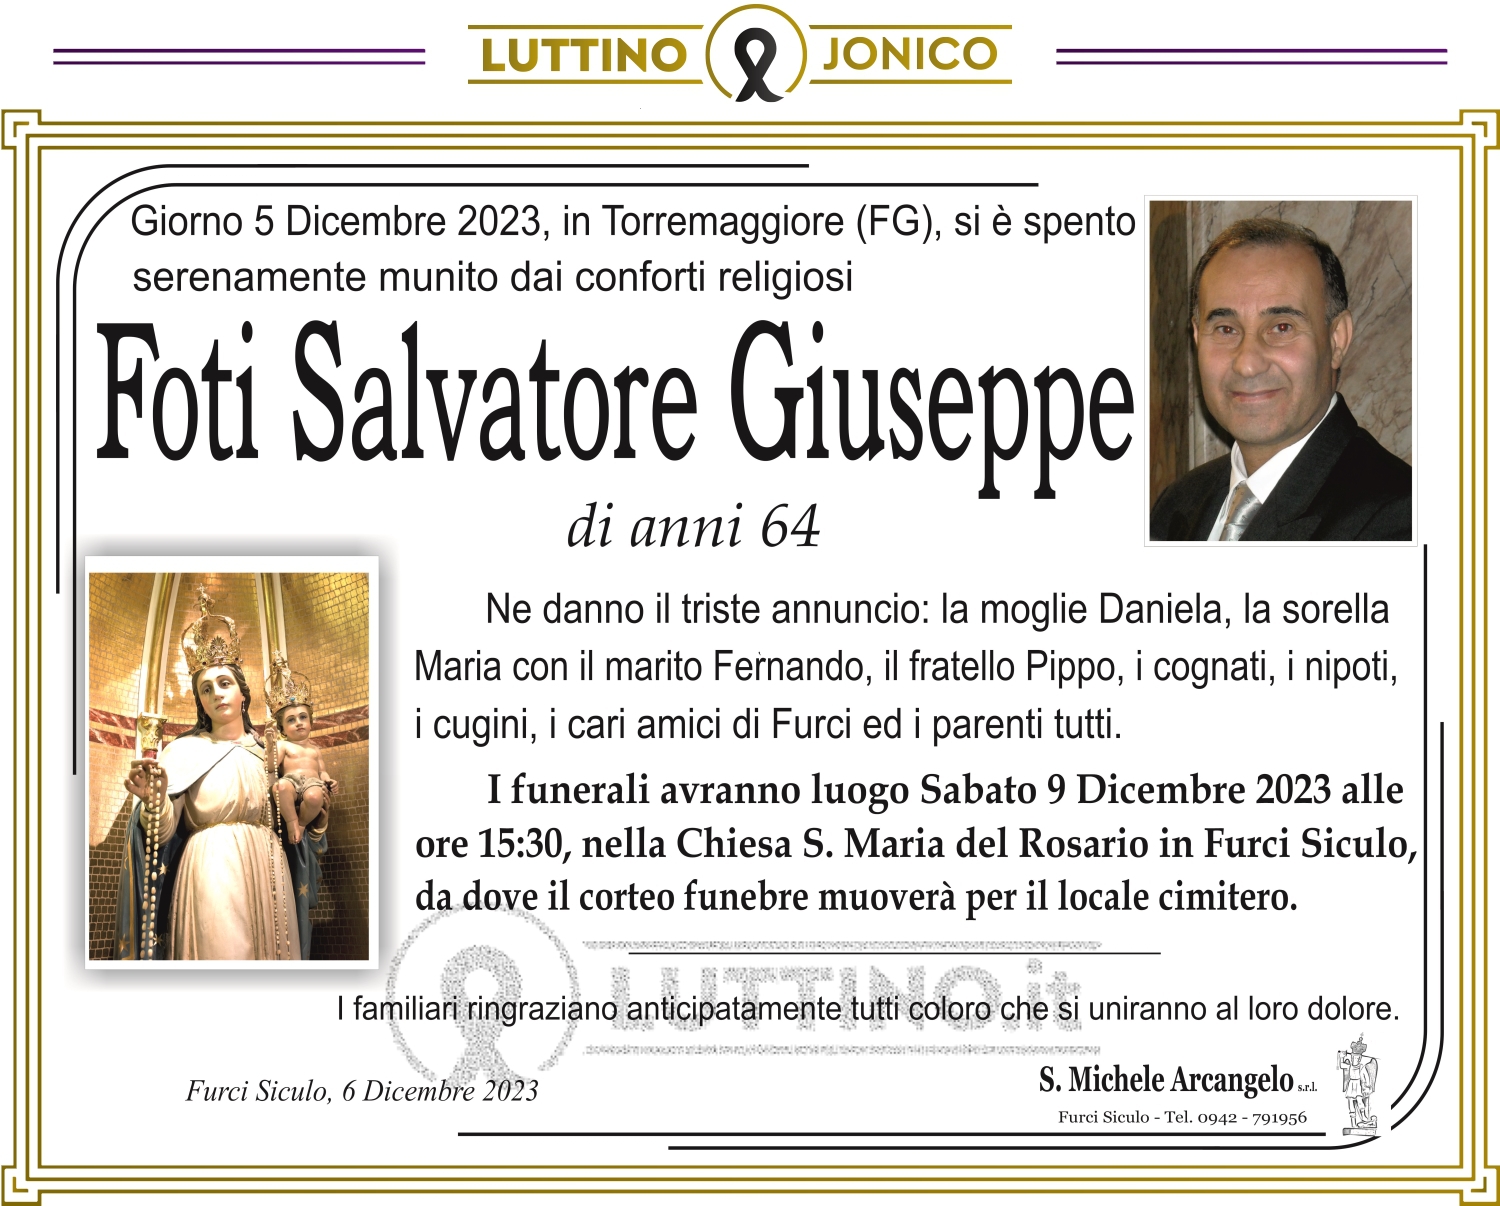 Salvatore Giuseppe Foti